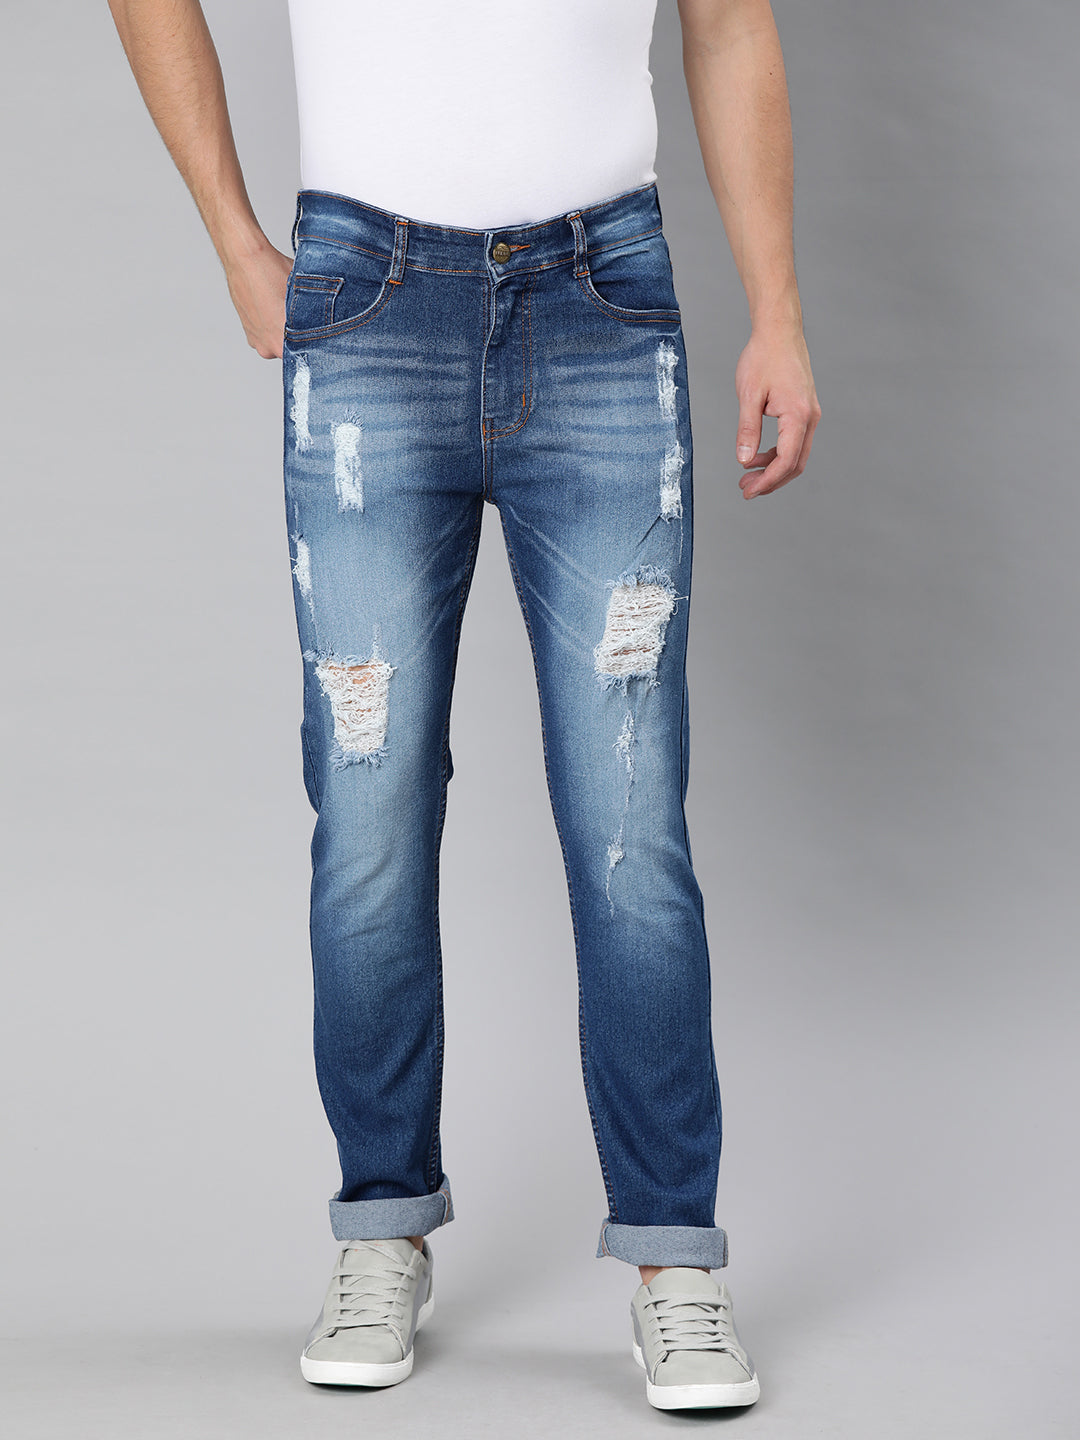 Urbano Fashion Men's Blue Slim Fit Heavy Distressed/Torn Jeans